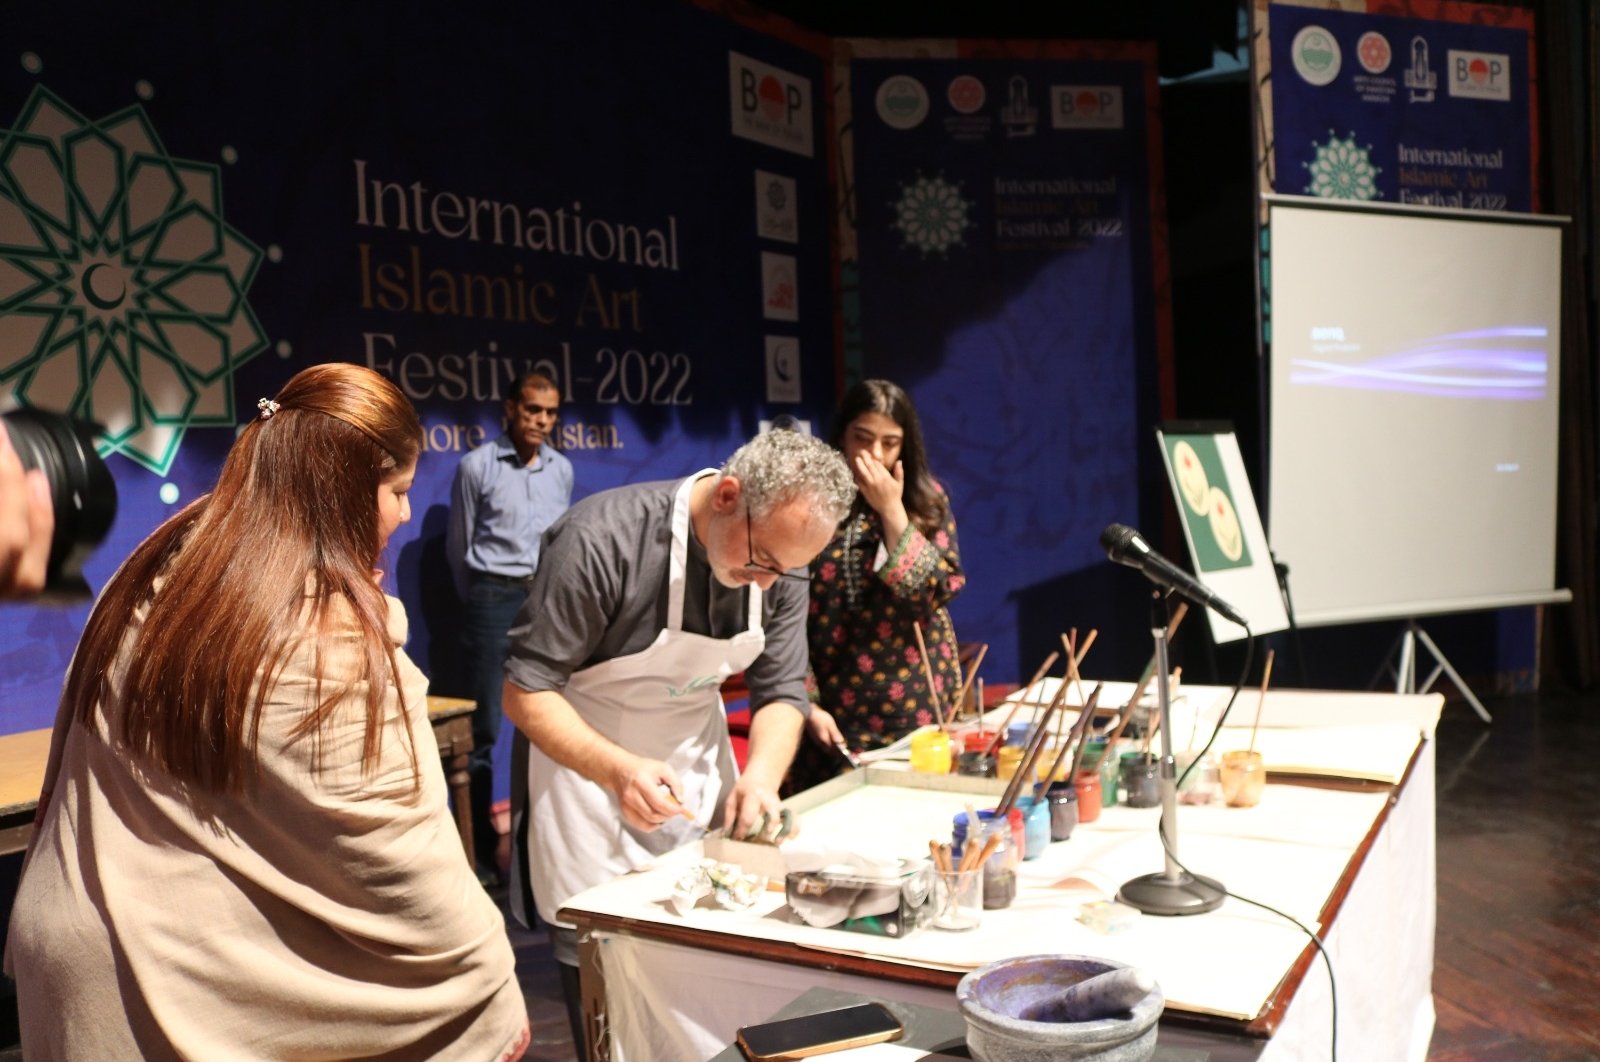 Turkish marble art presented at Islamic Art Festival in Pakistan| Roadsleeper.com